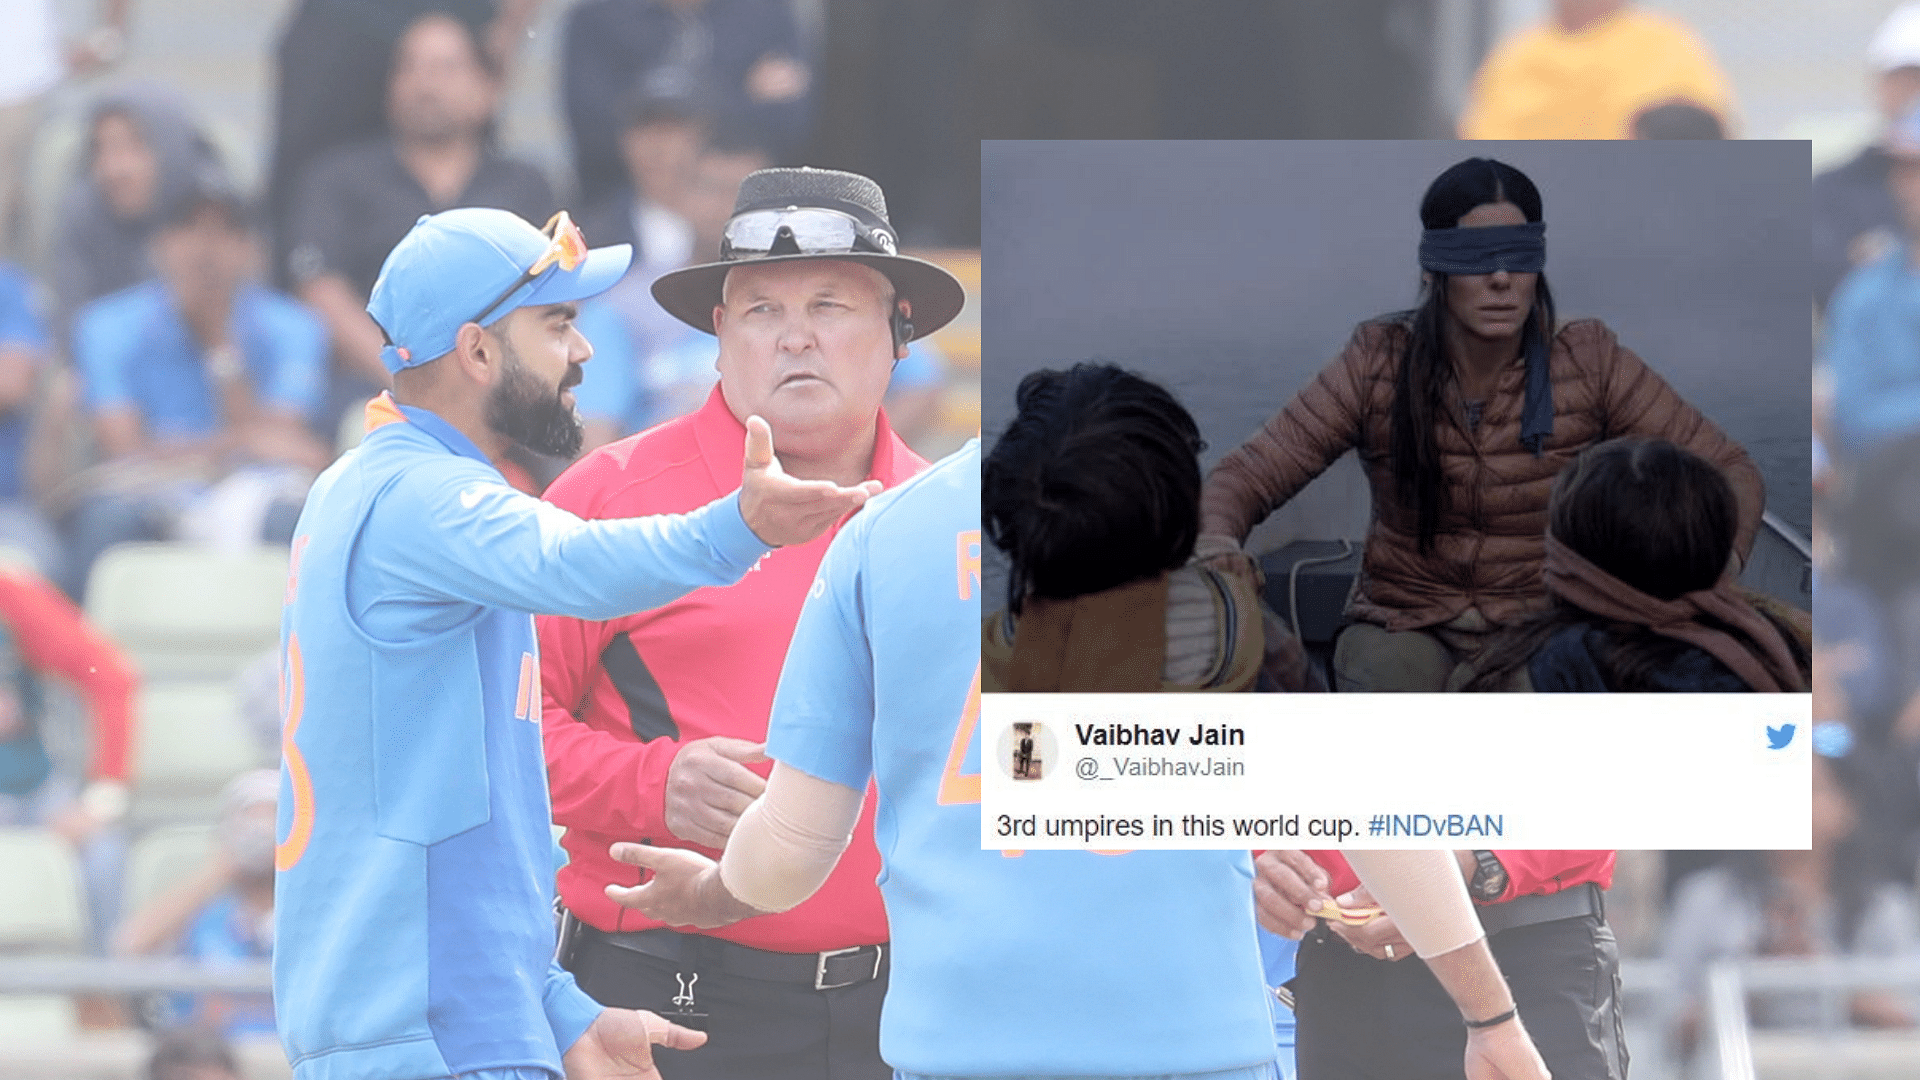 Ind vs Ban World Cup: Emotions ran high on social media as India played against Bangladesh at Birmingham. 